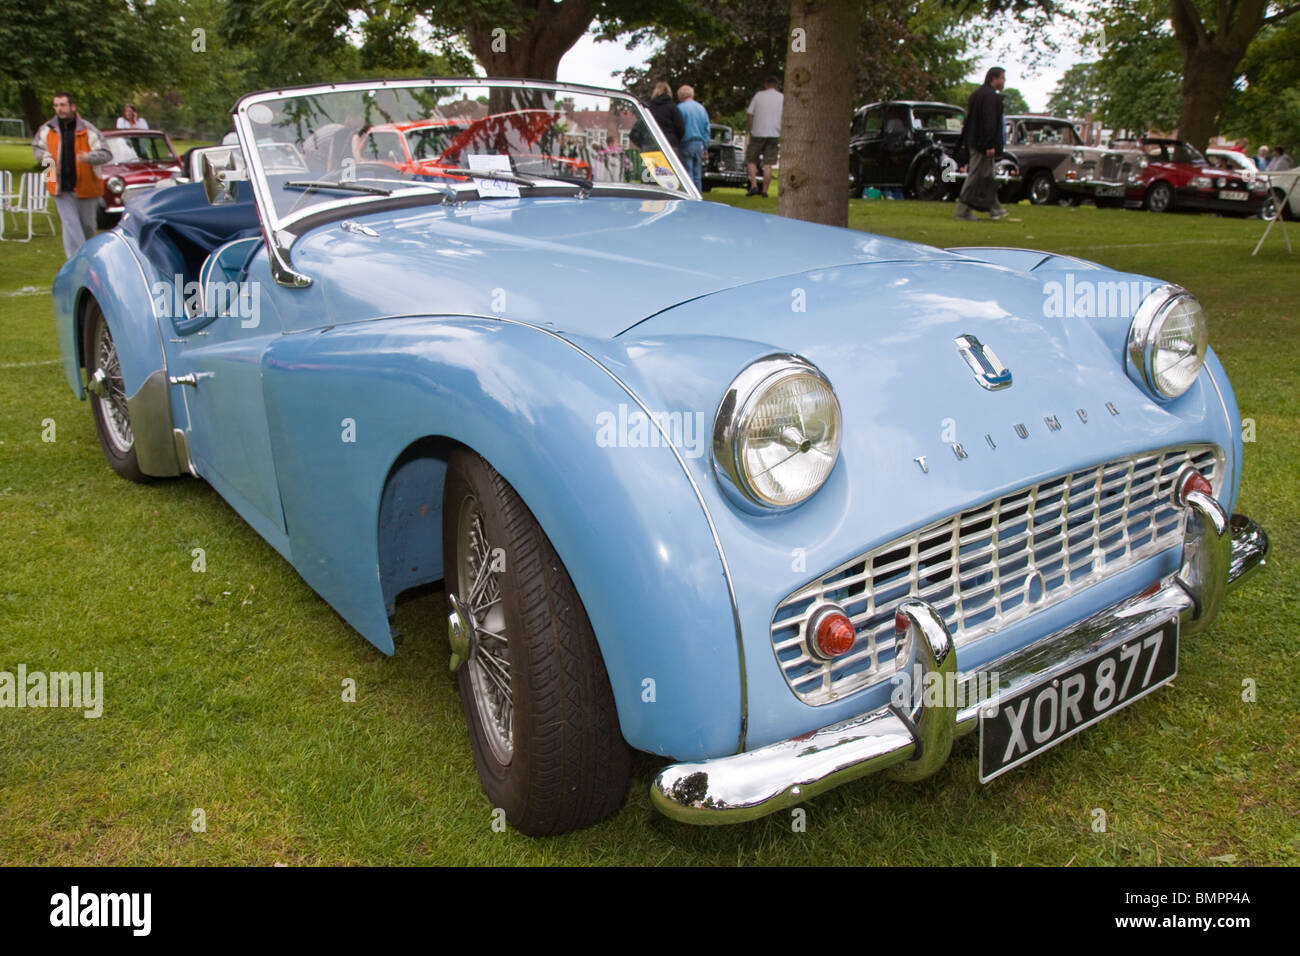 Blue Triumph TR3 classic car Stock Photo